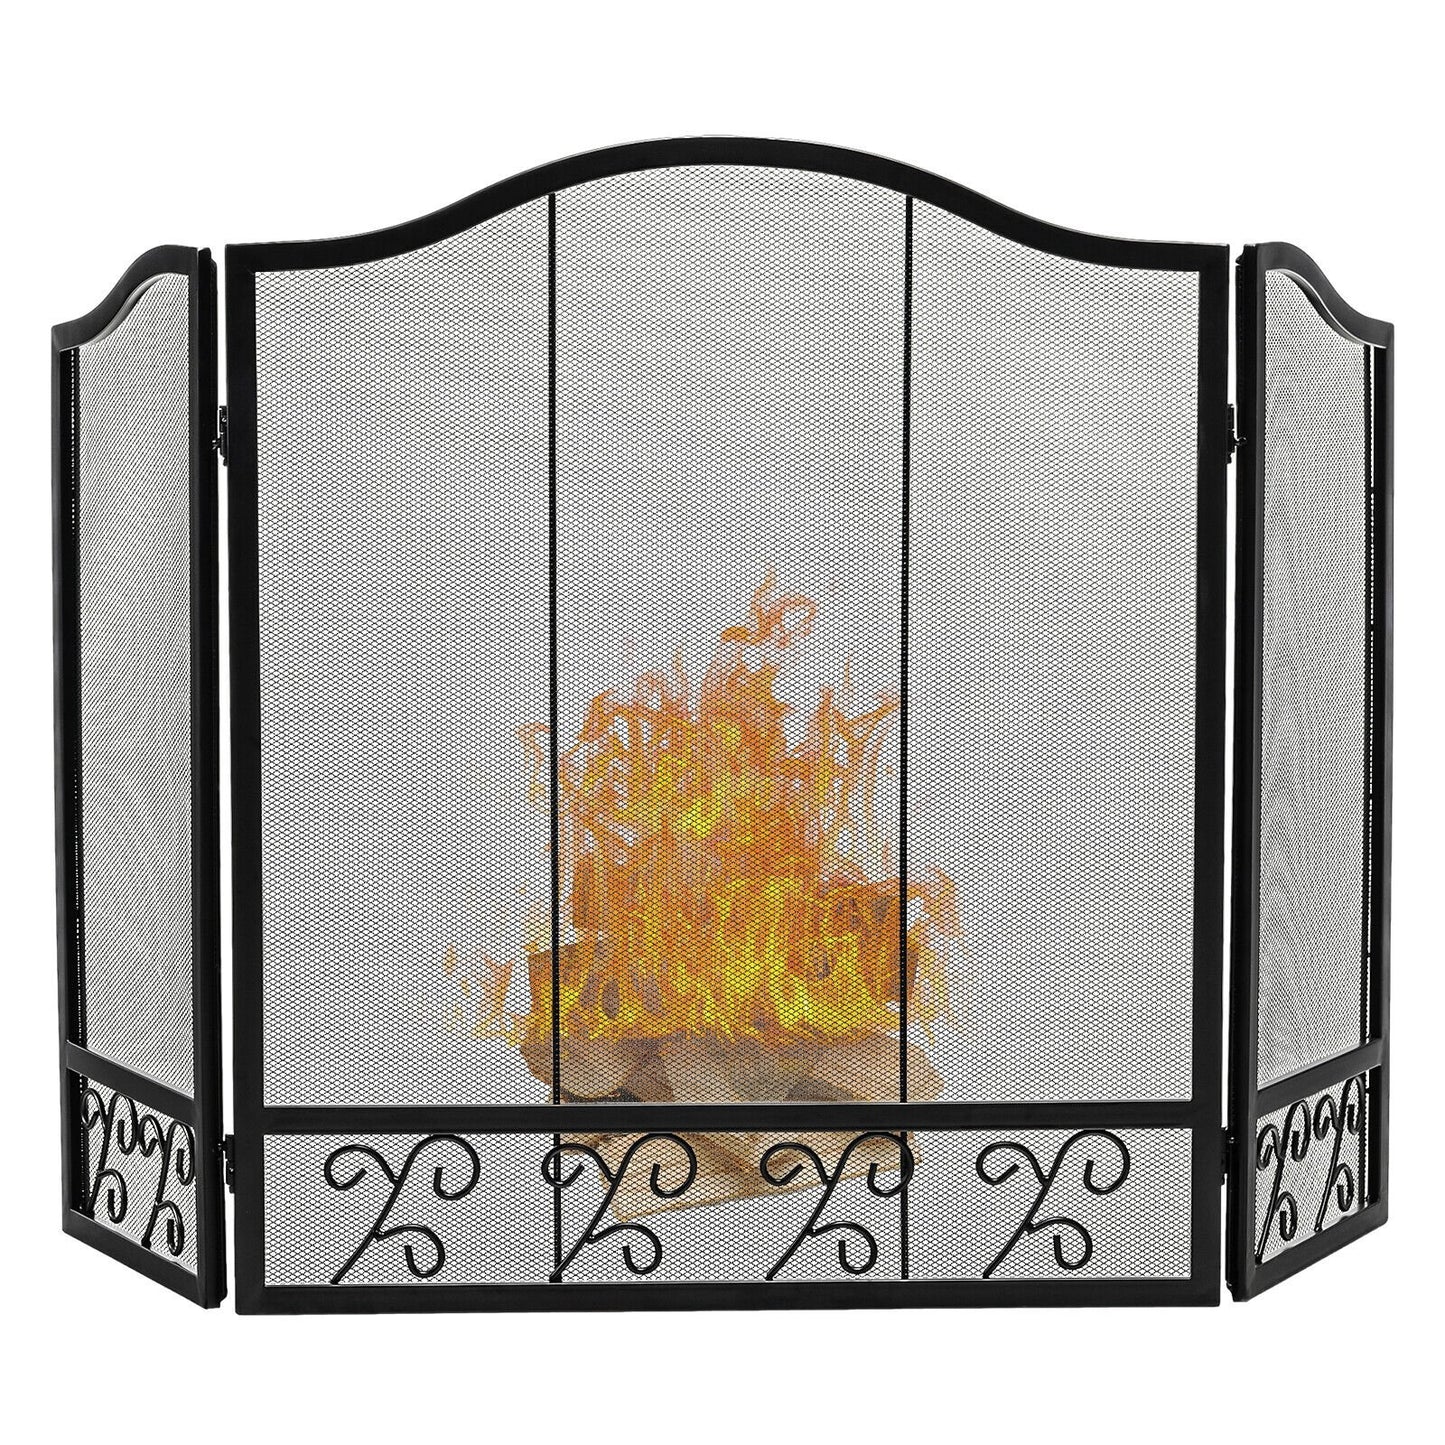 3-Panel Fireplace Screen Decorative Spark Guard, Black